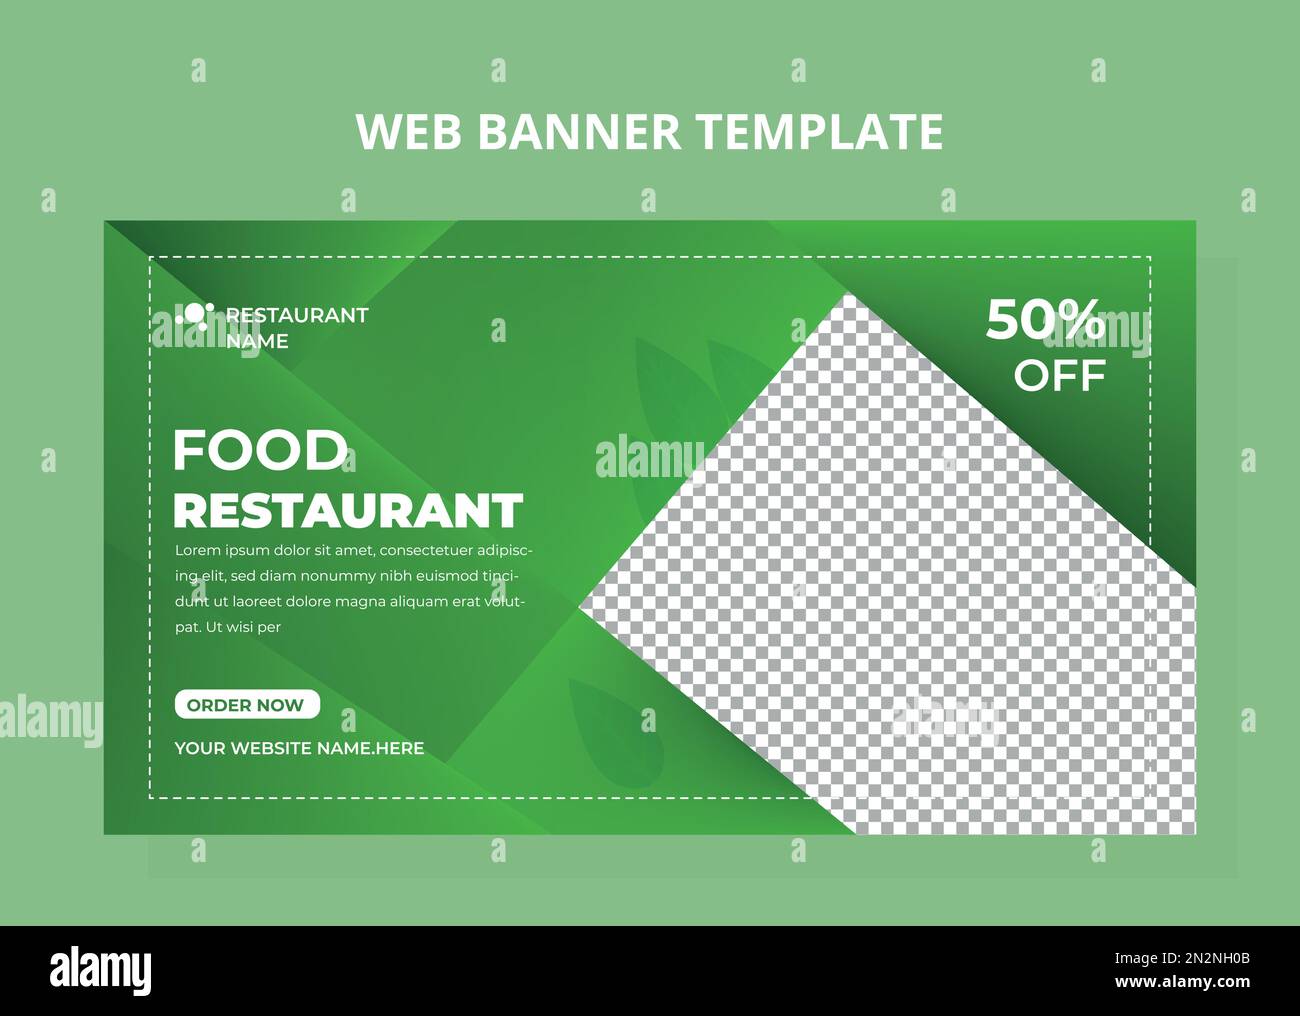 Food Restaurant Web Banner Template. Stock Vector